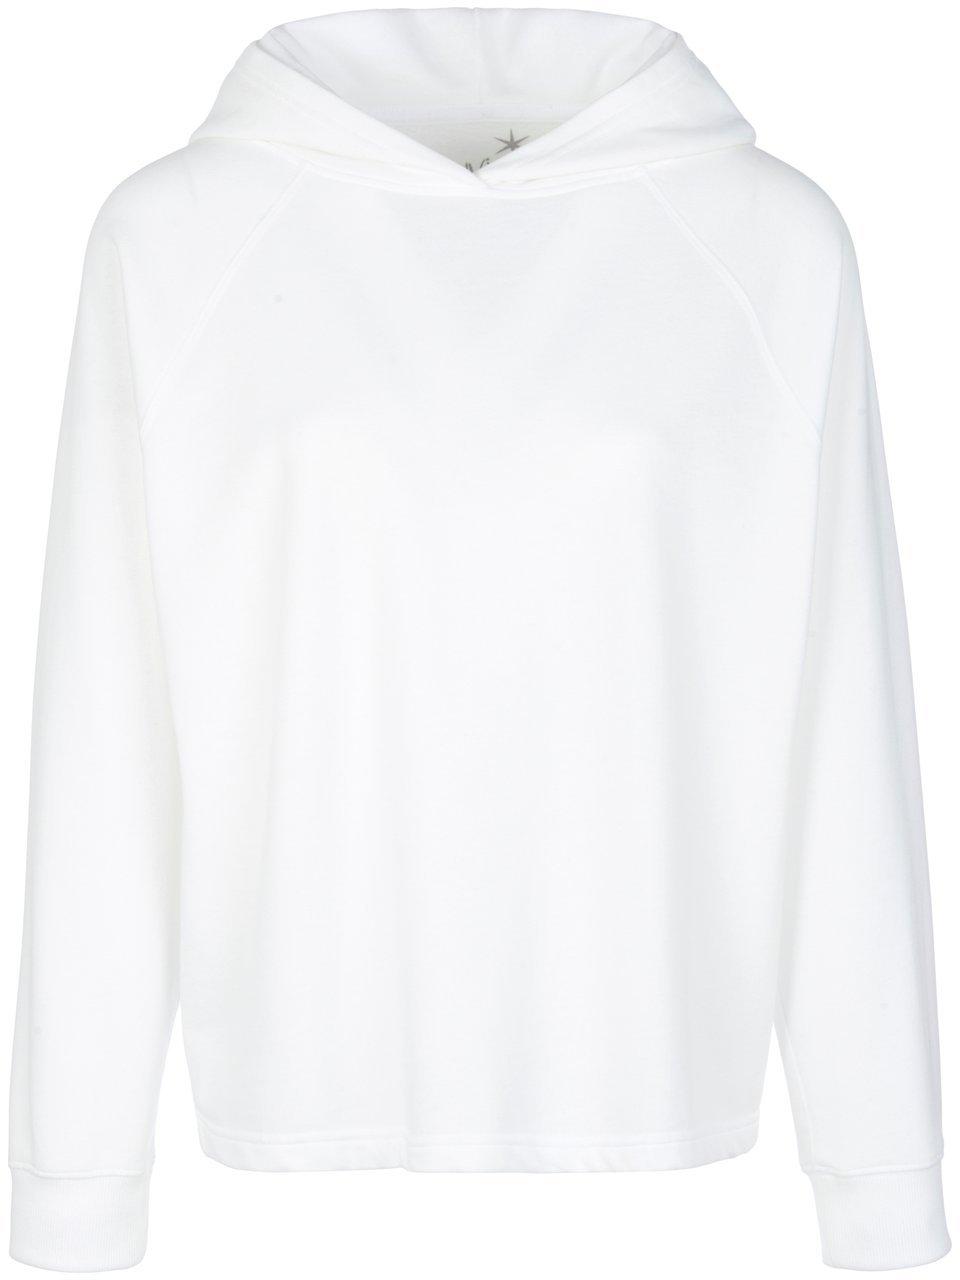 Hoodie-sweatshirt lange raglanmouwen Van Juvia wit